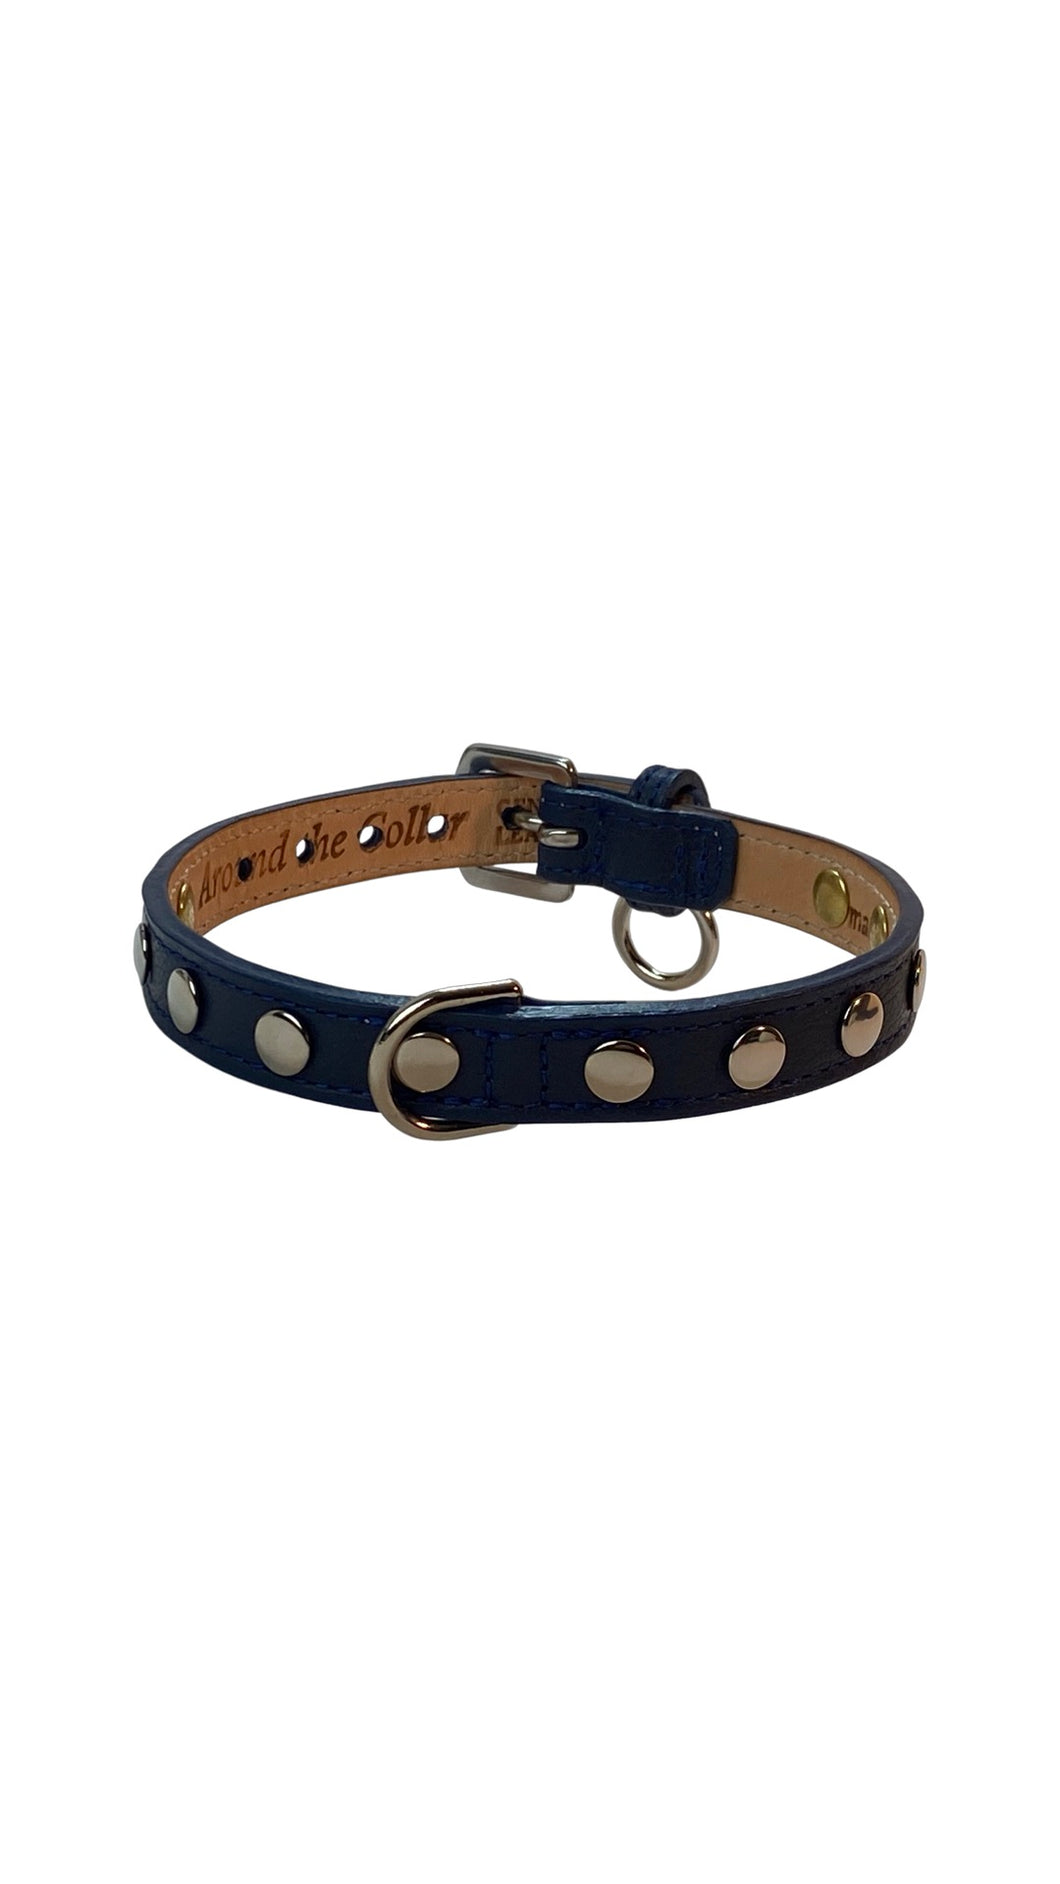 ELVIS Single Row Nickel Studs Leather Dog Collar